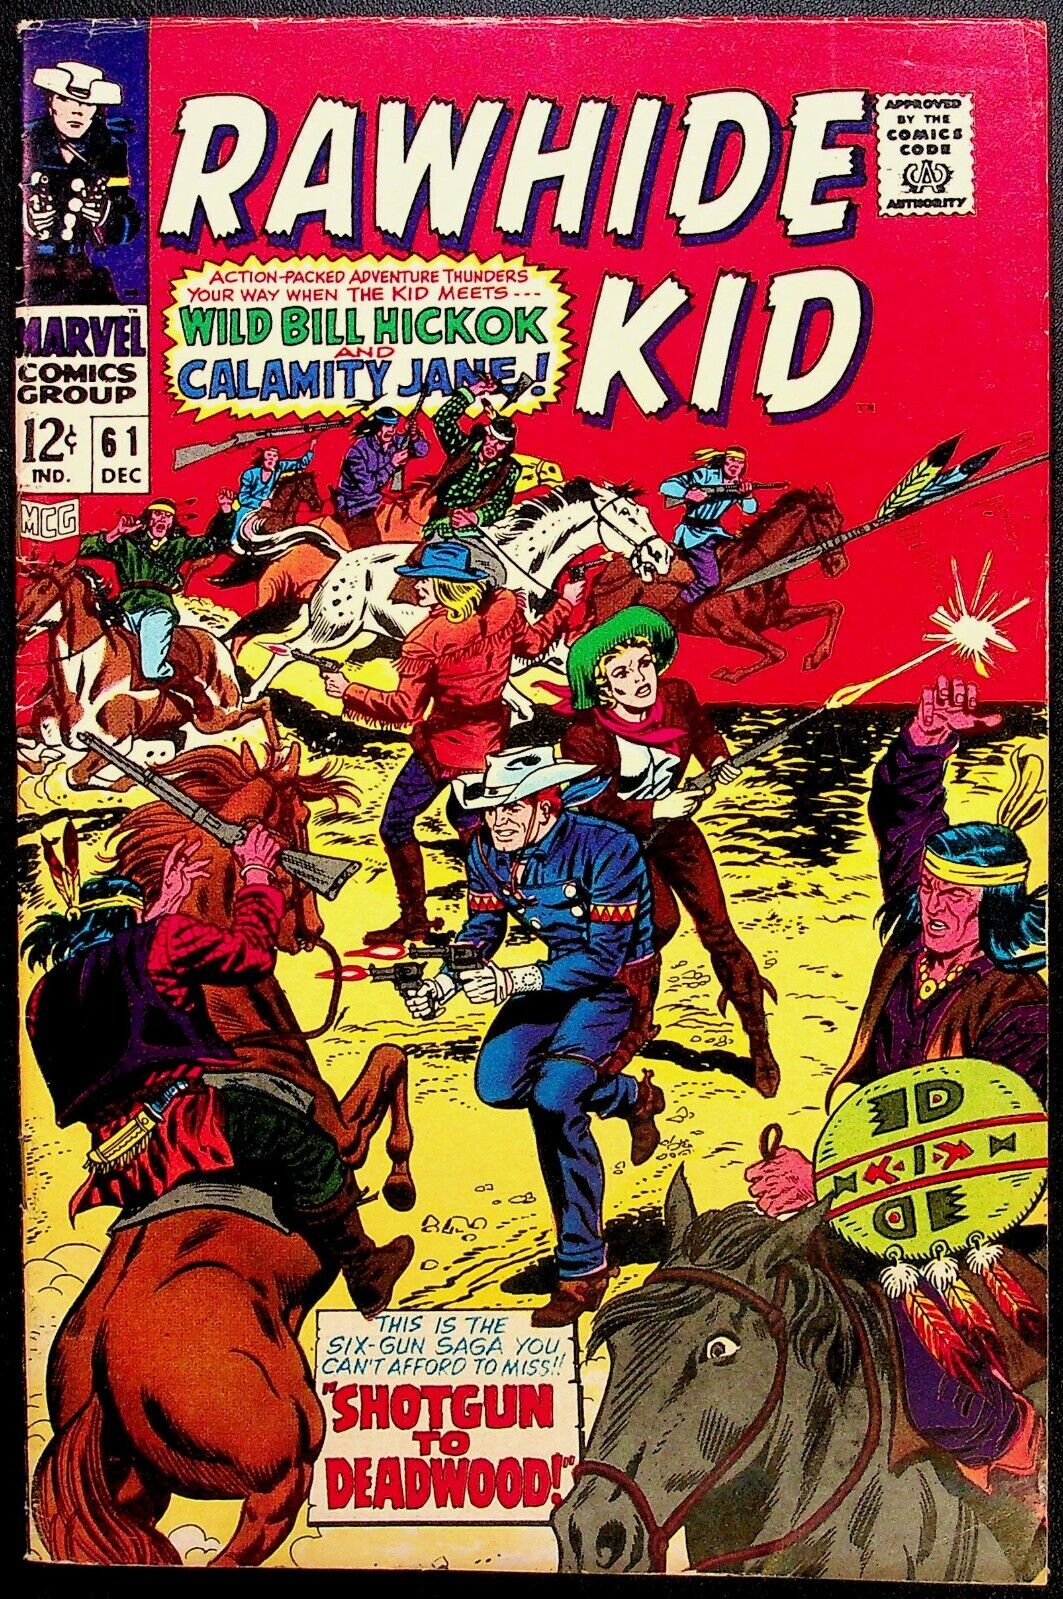 Rawhide Kid #61 Marvel Comics 1967 VG-FN (5.0)